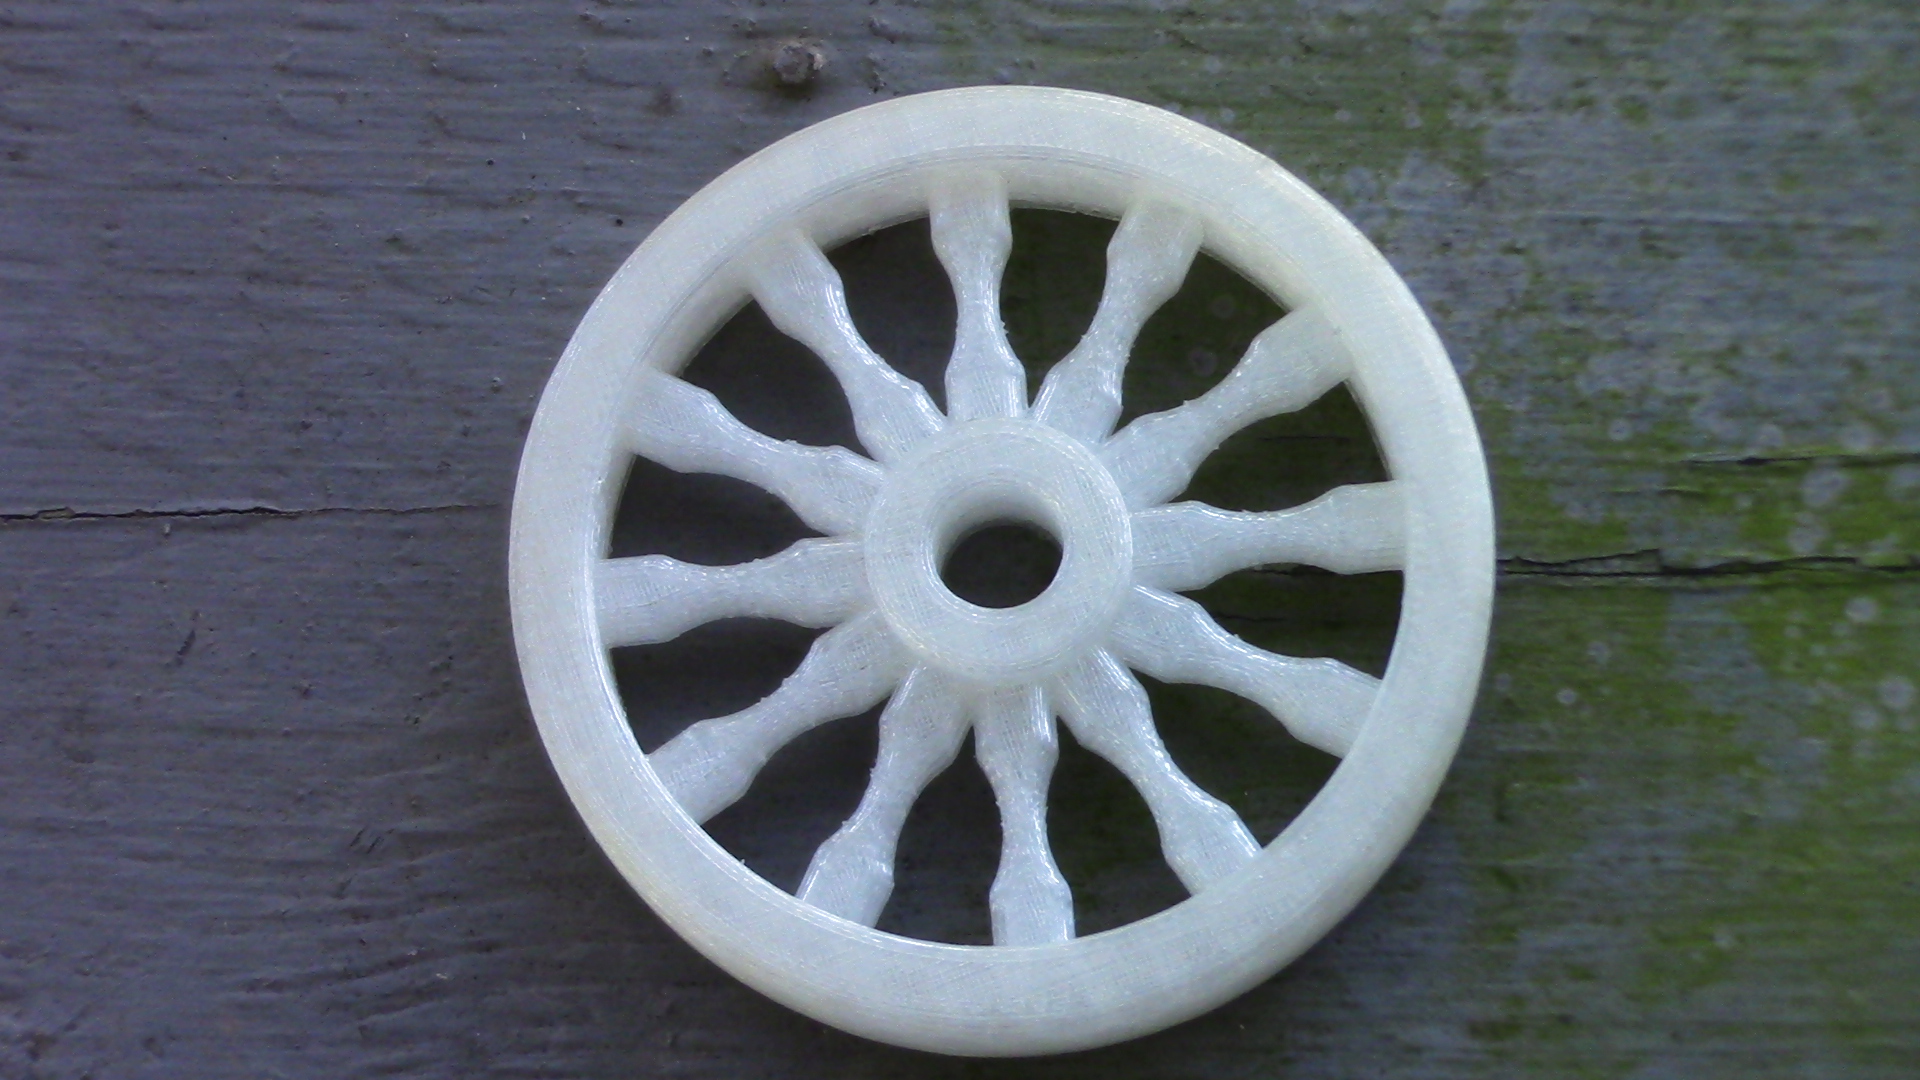 Wagon wheel pendant or ornament